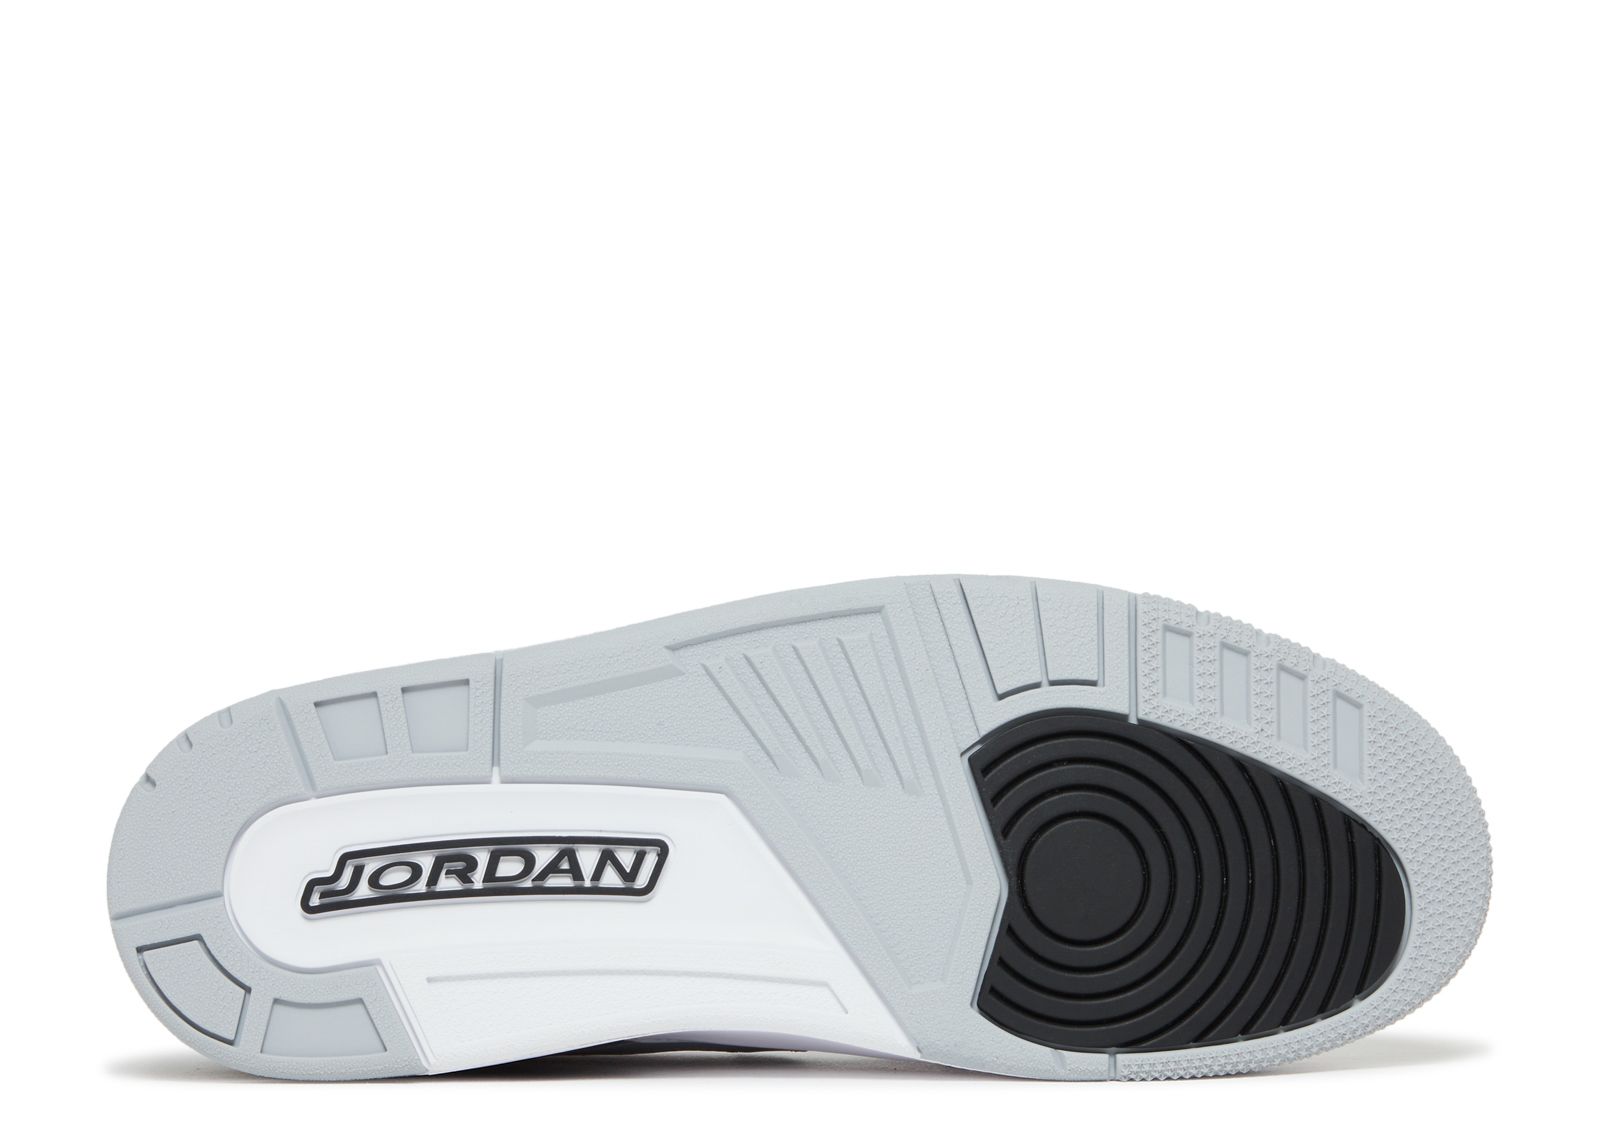 JORDAN Air Jordan Legacy 312 Low Light Smoke Grey, CD7069-105, white/black-wolf grey at solebox